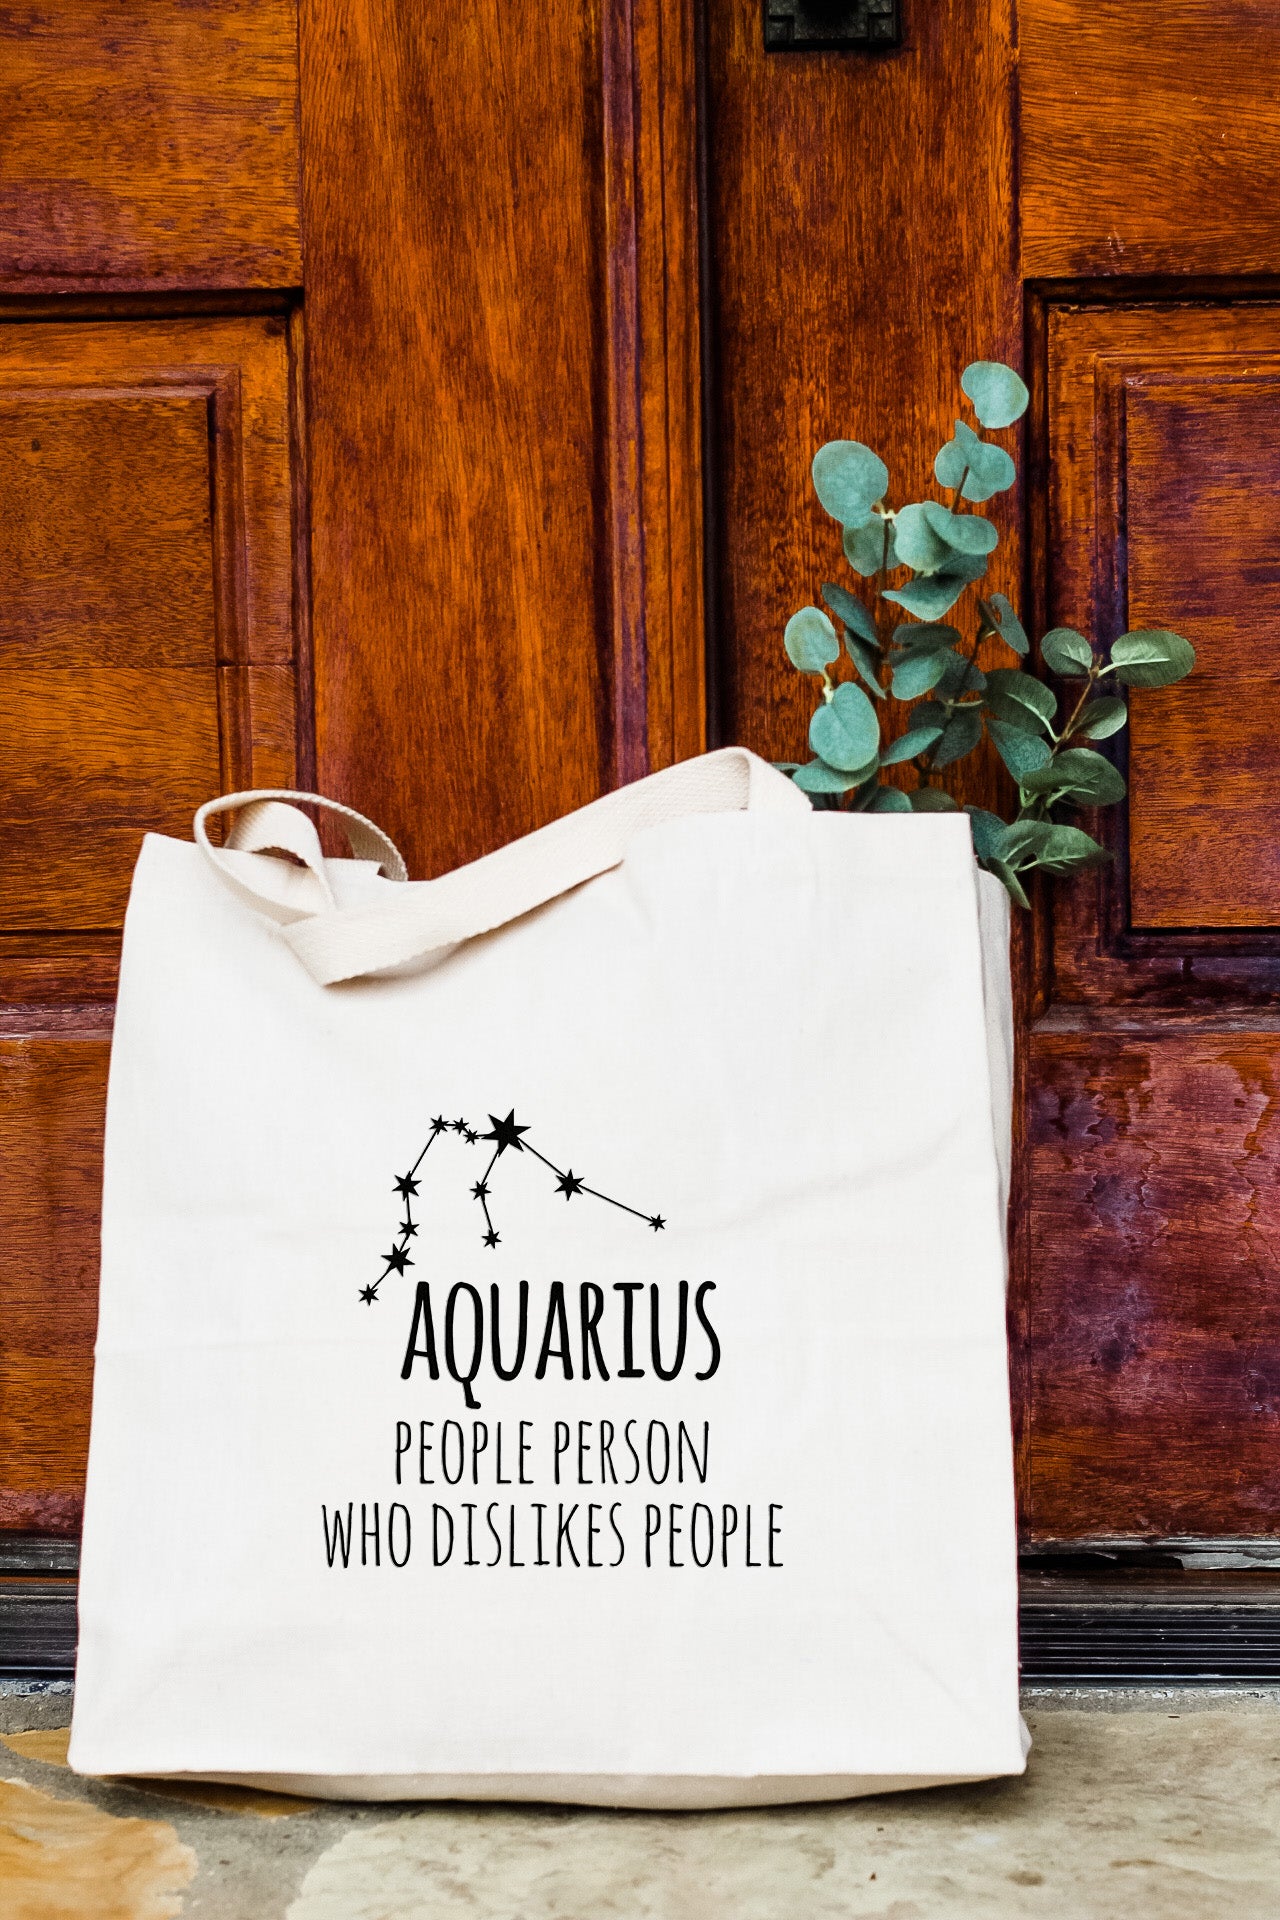 Aquarius Zodiac (People Person Who Dislikes People) - Tote Bag - MoonlightMakers